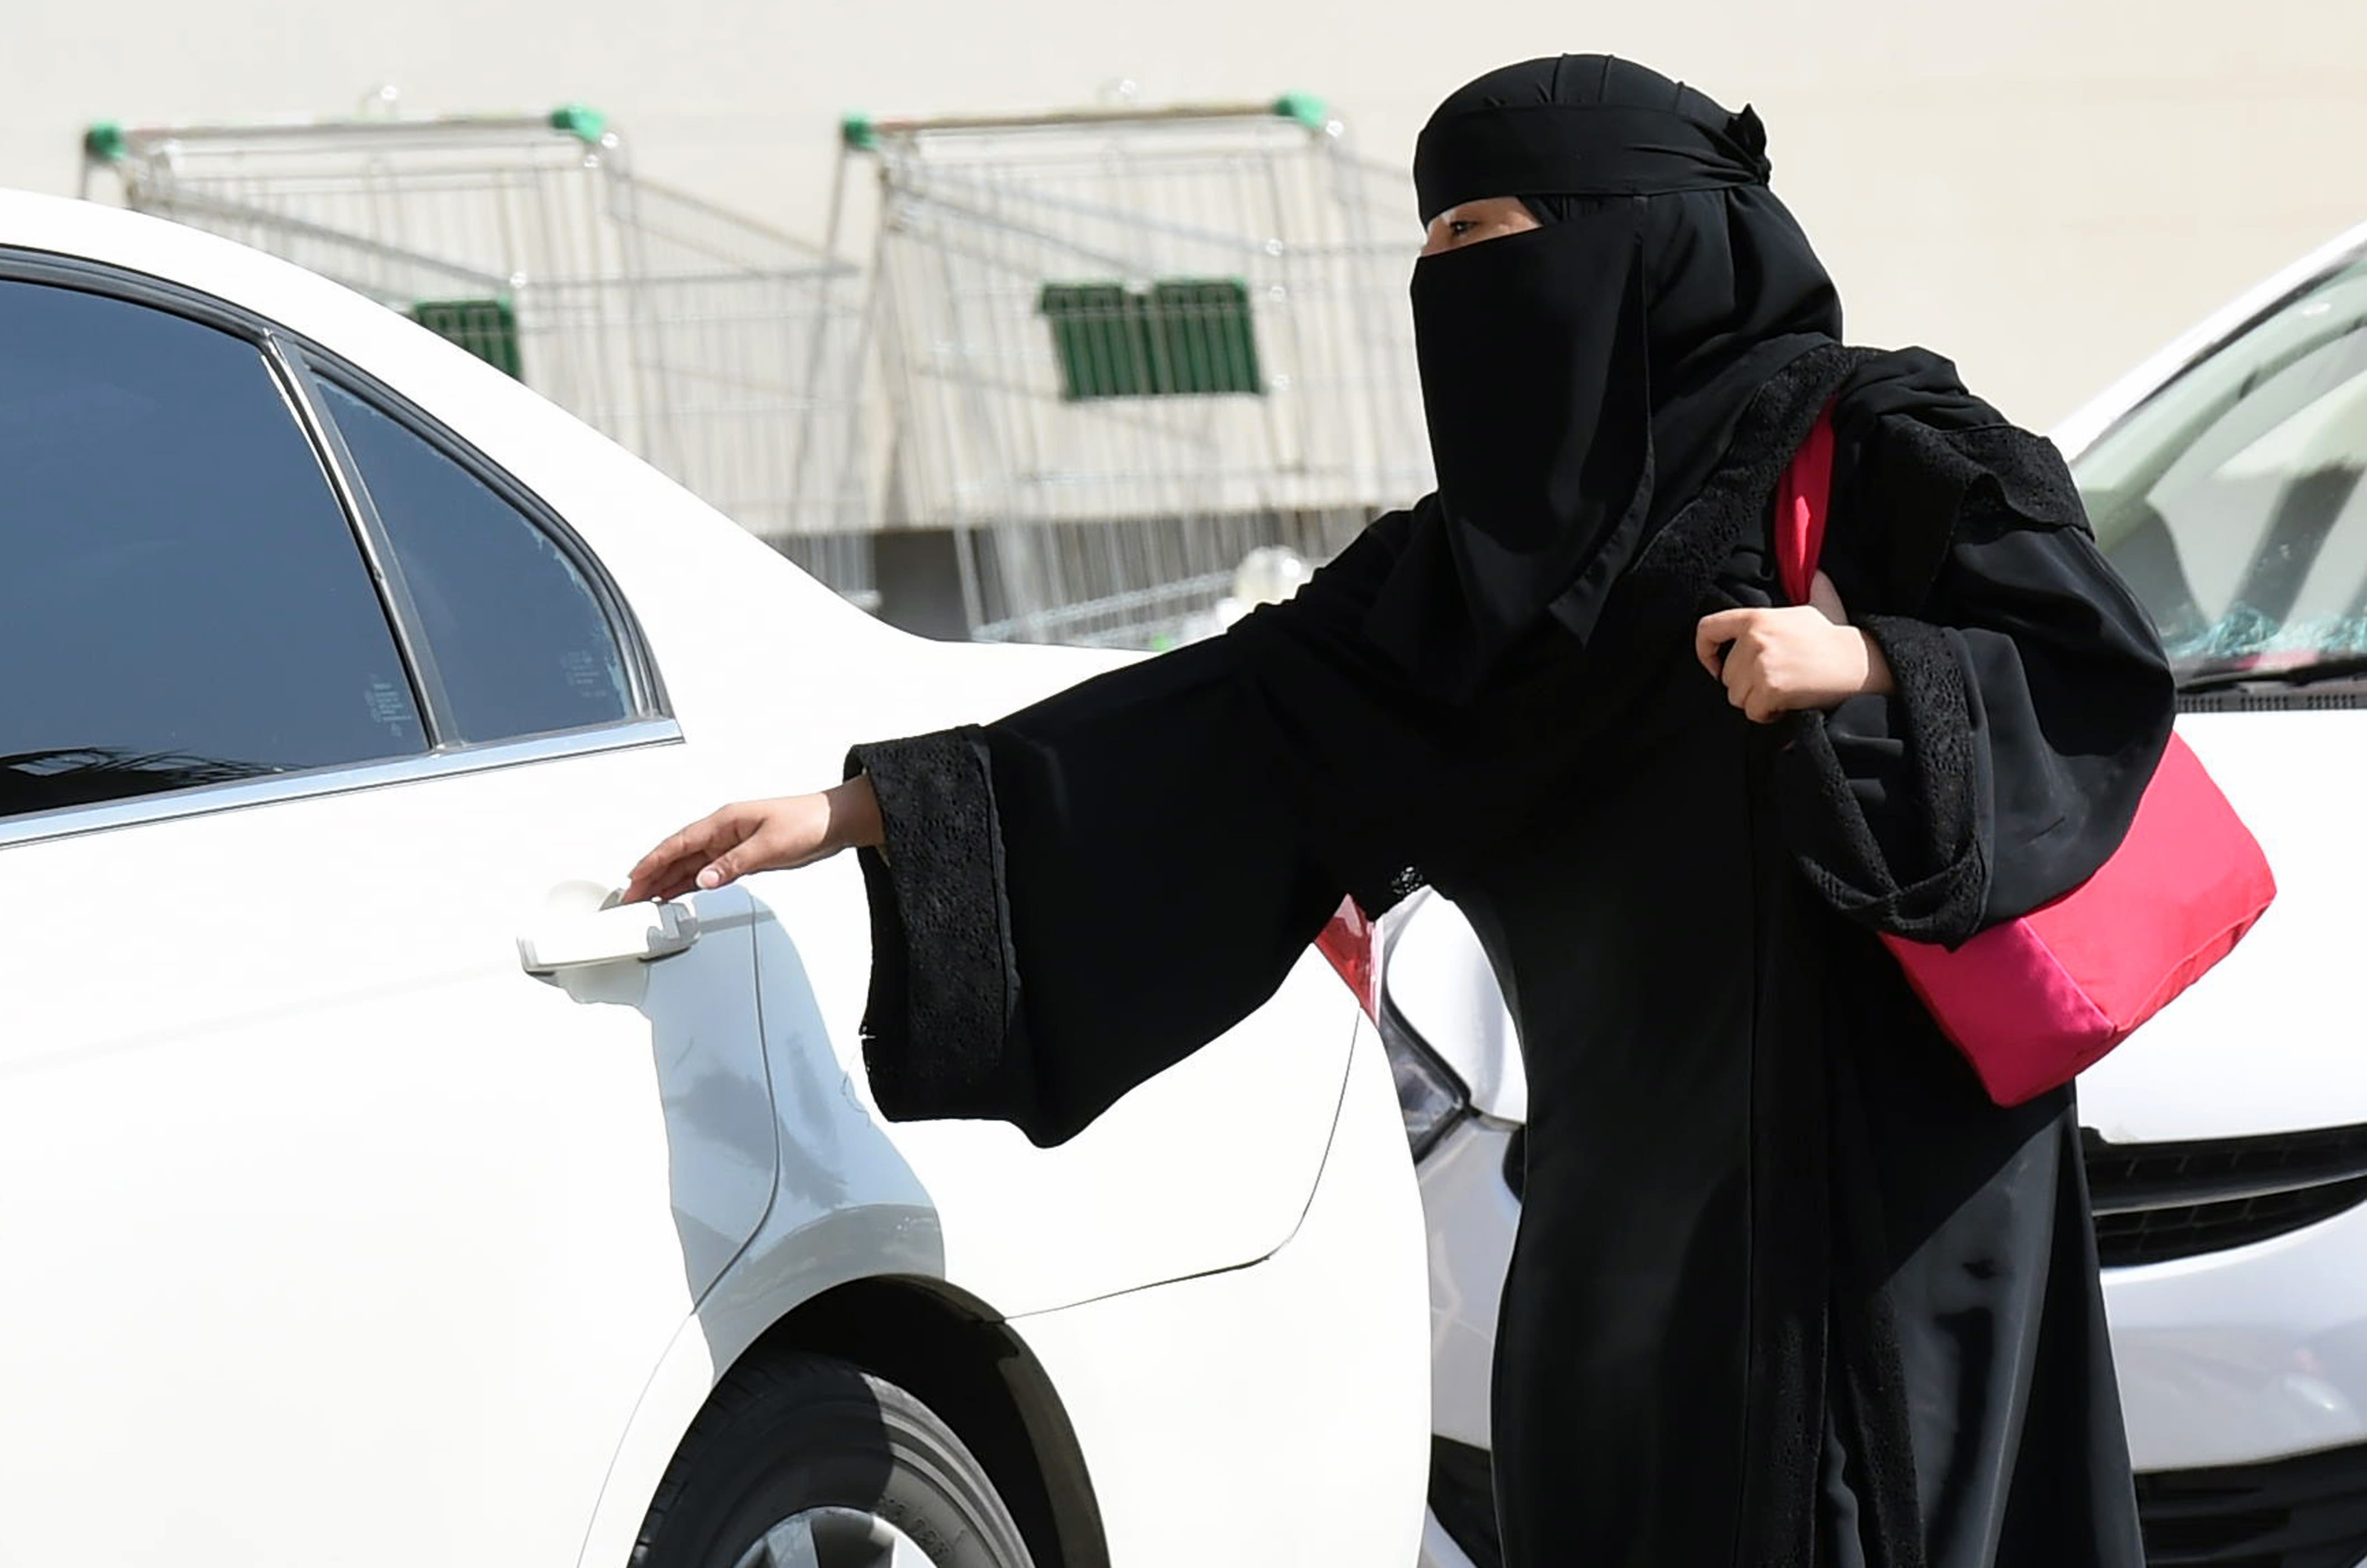 Spokeswoman defends progress in Saudi Arabia | CNN